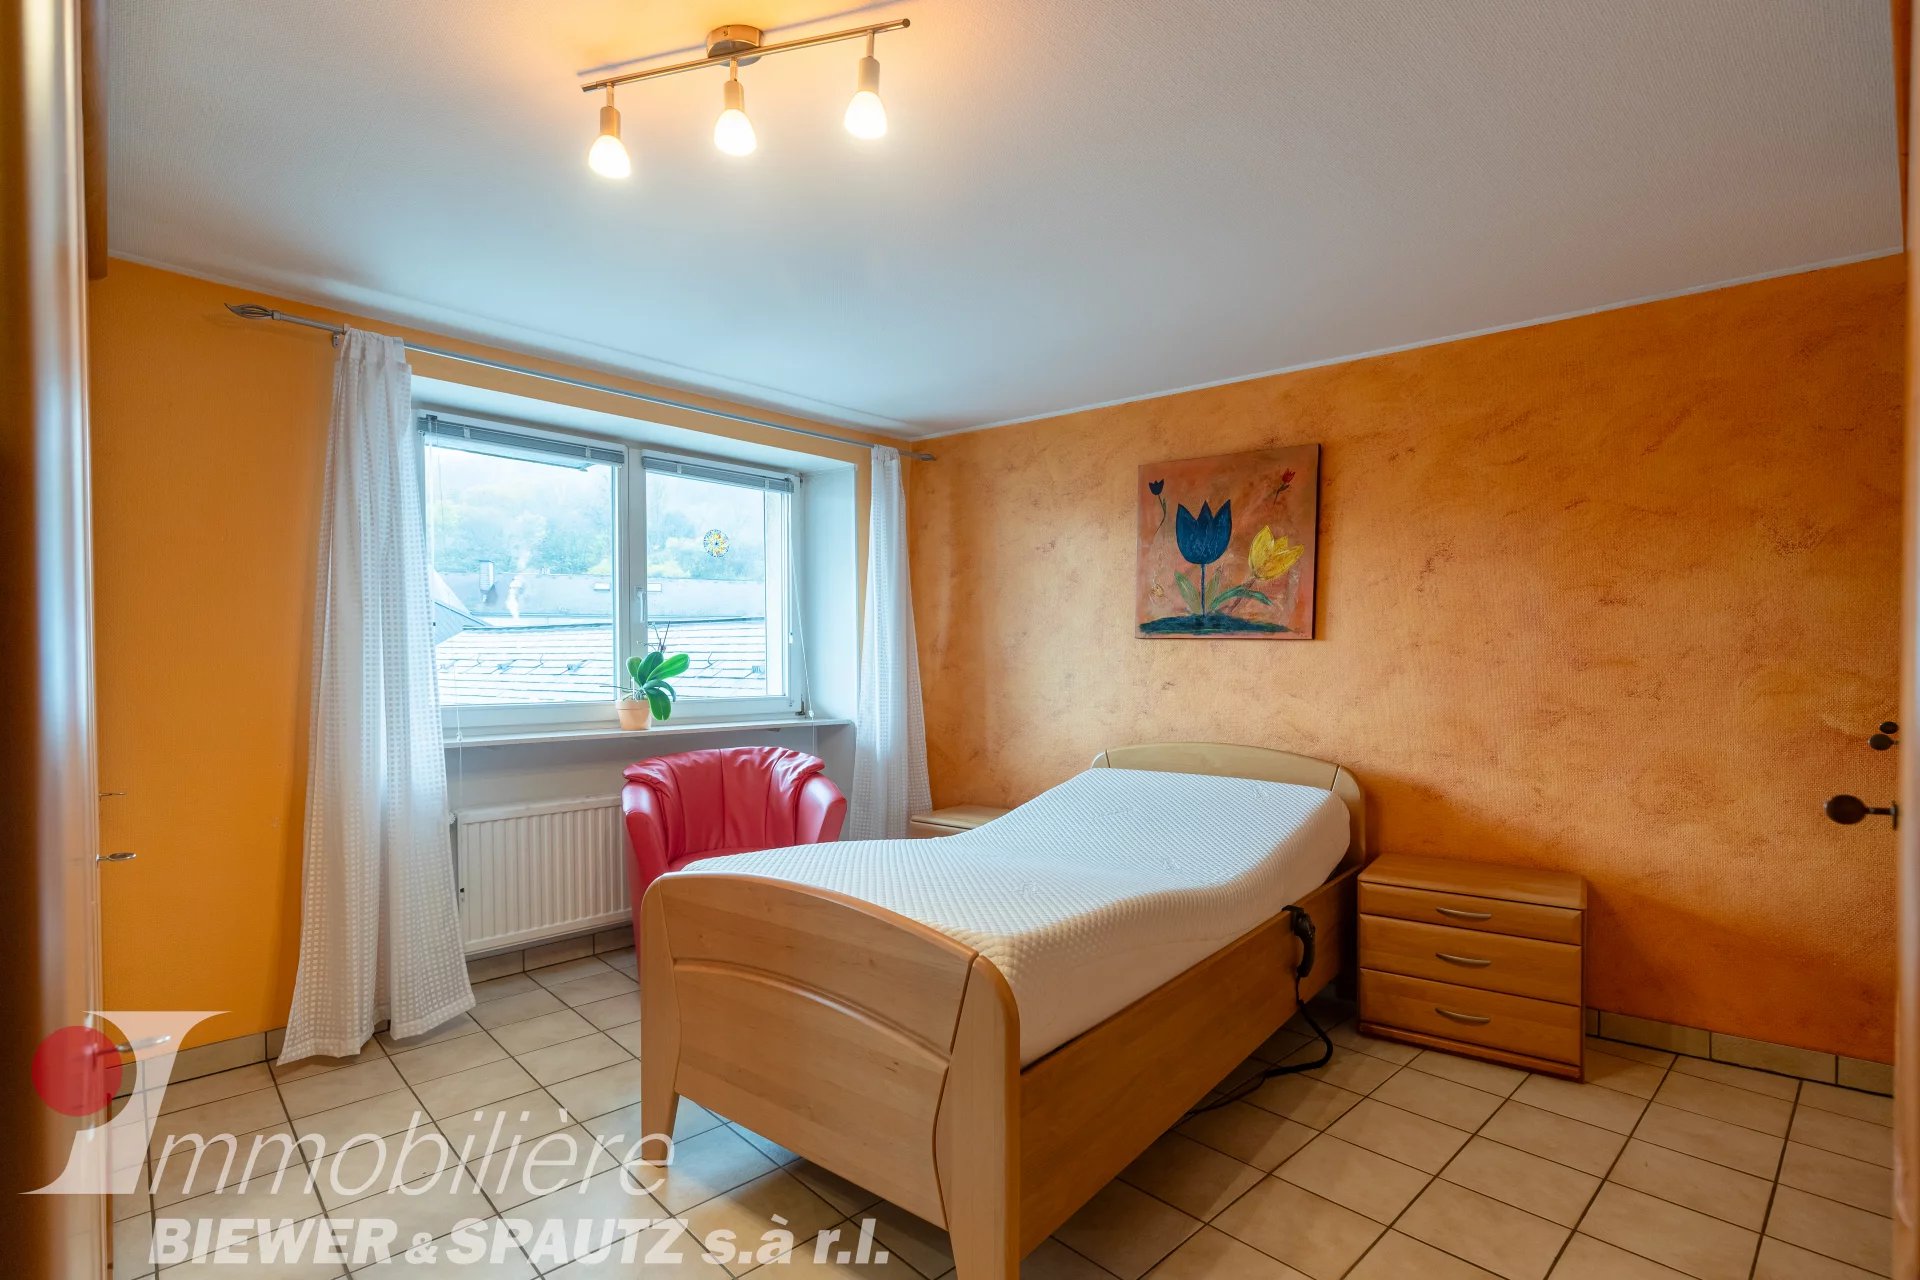 FOR SALE - 2 bedroom flat in Echternach